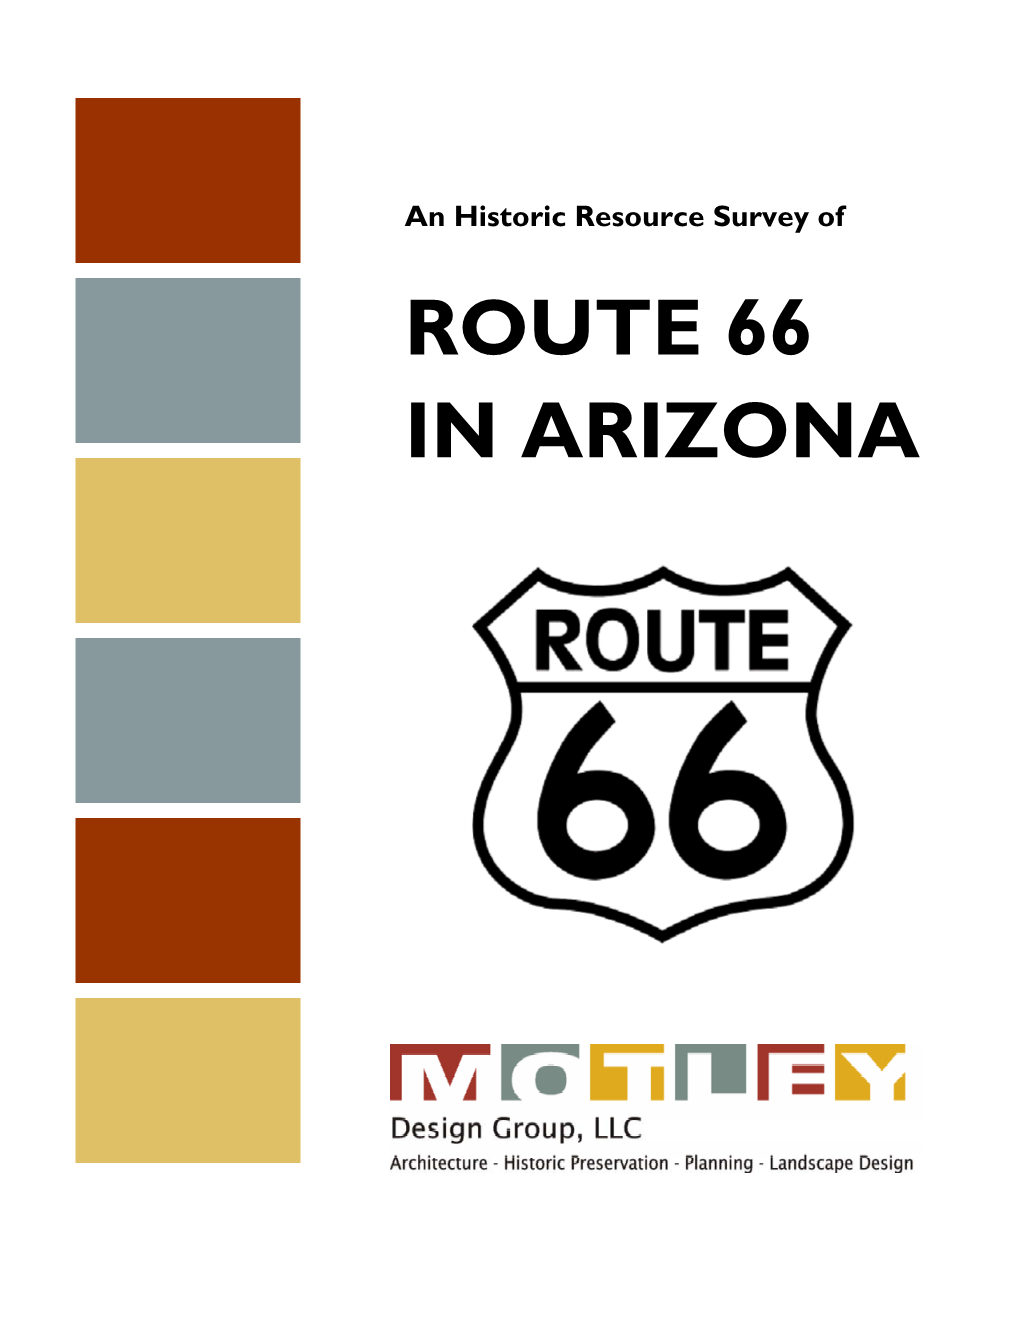 Historic Resource Survey of Route 66 in Arizona